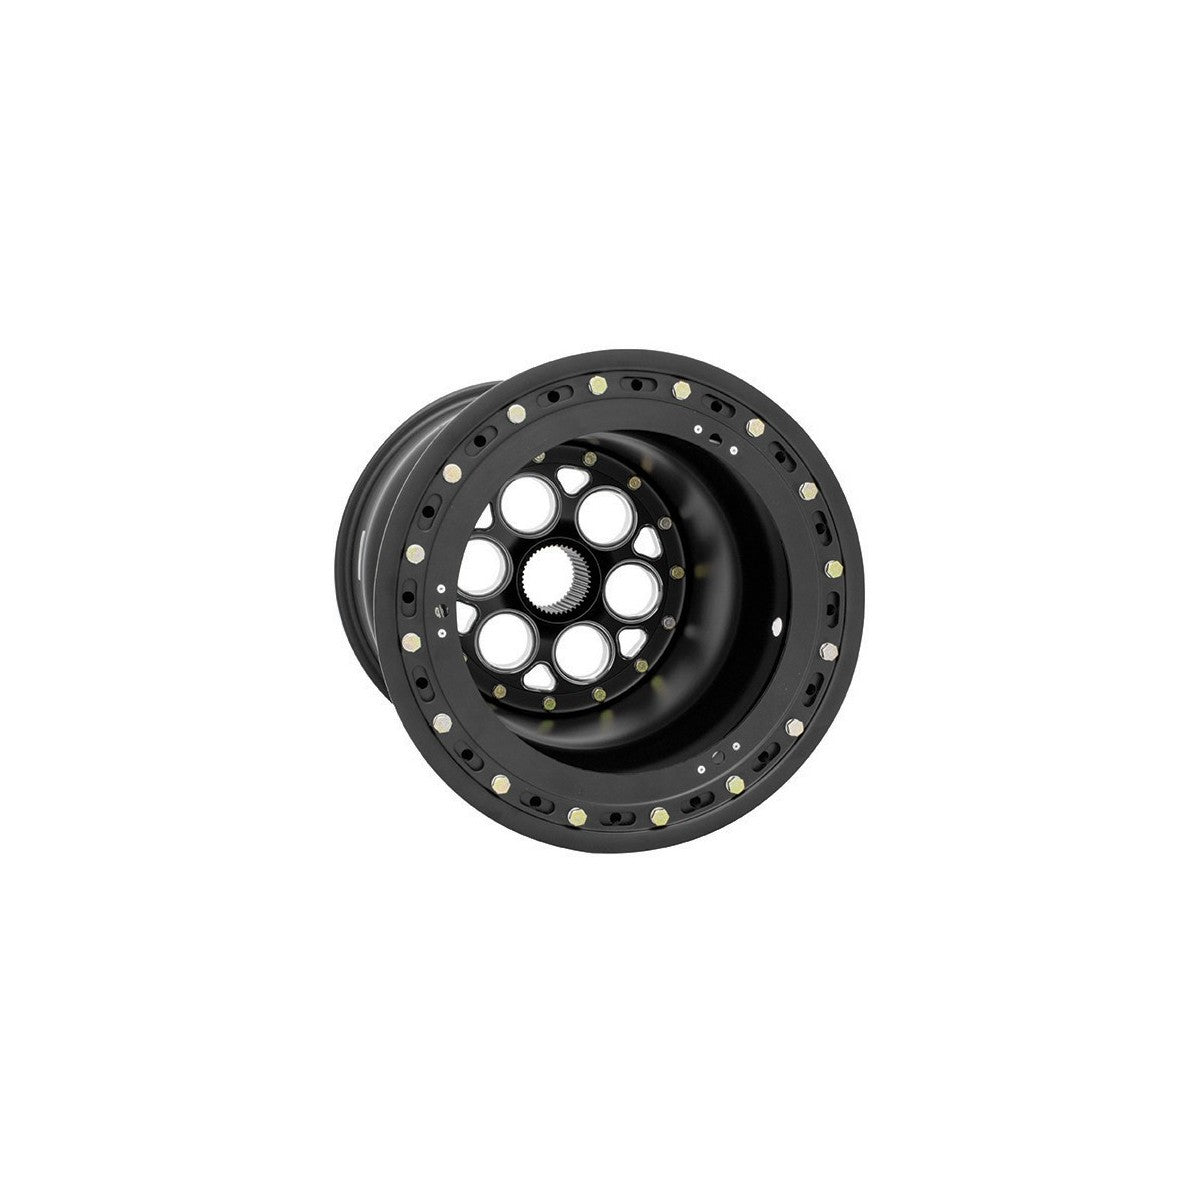 Weld 735B-51747-6 Magnum Sprint Wheel 15x17 42-Spline ET0 BS7 Black Center - Polished Shell